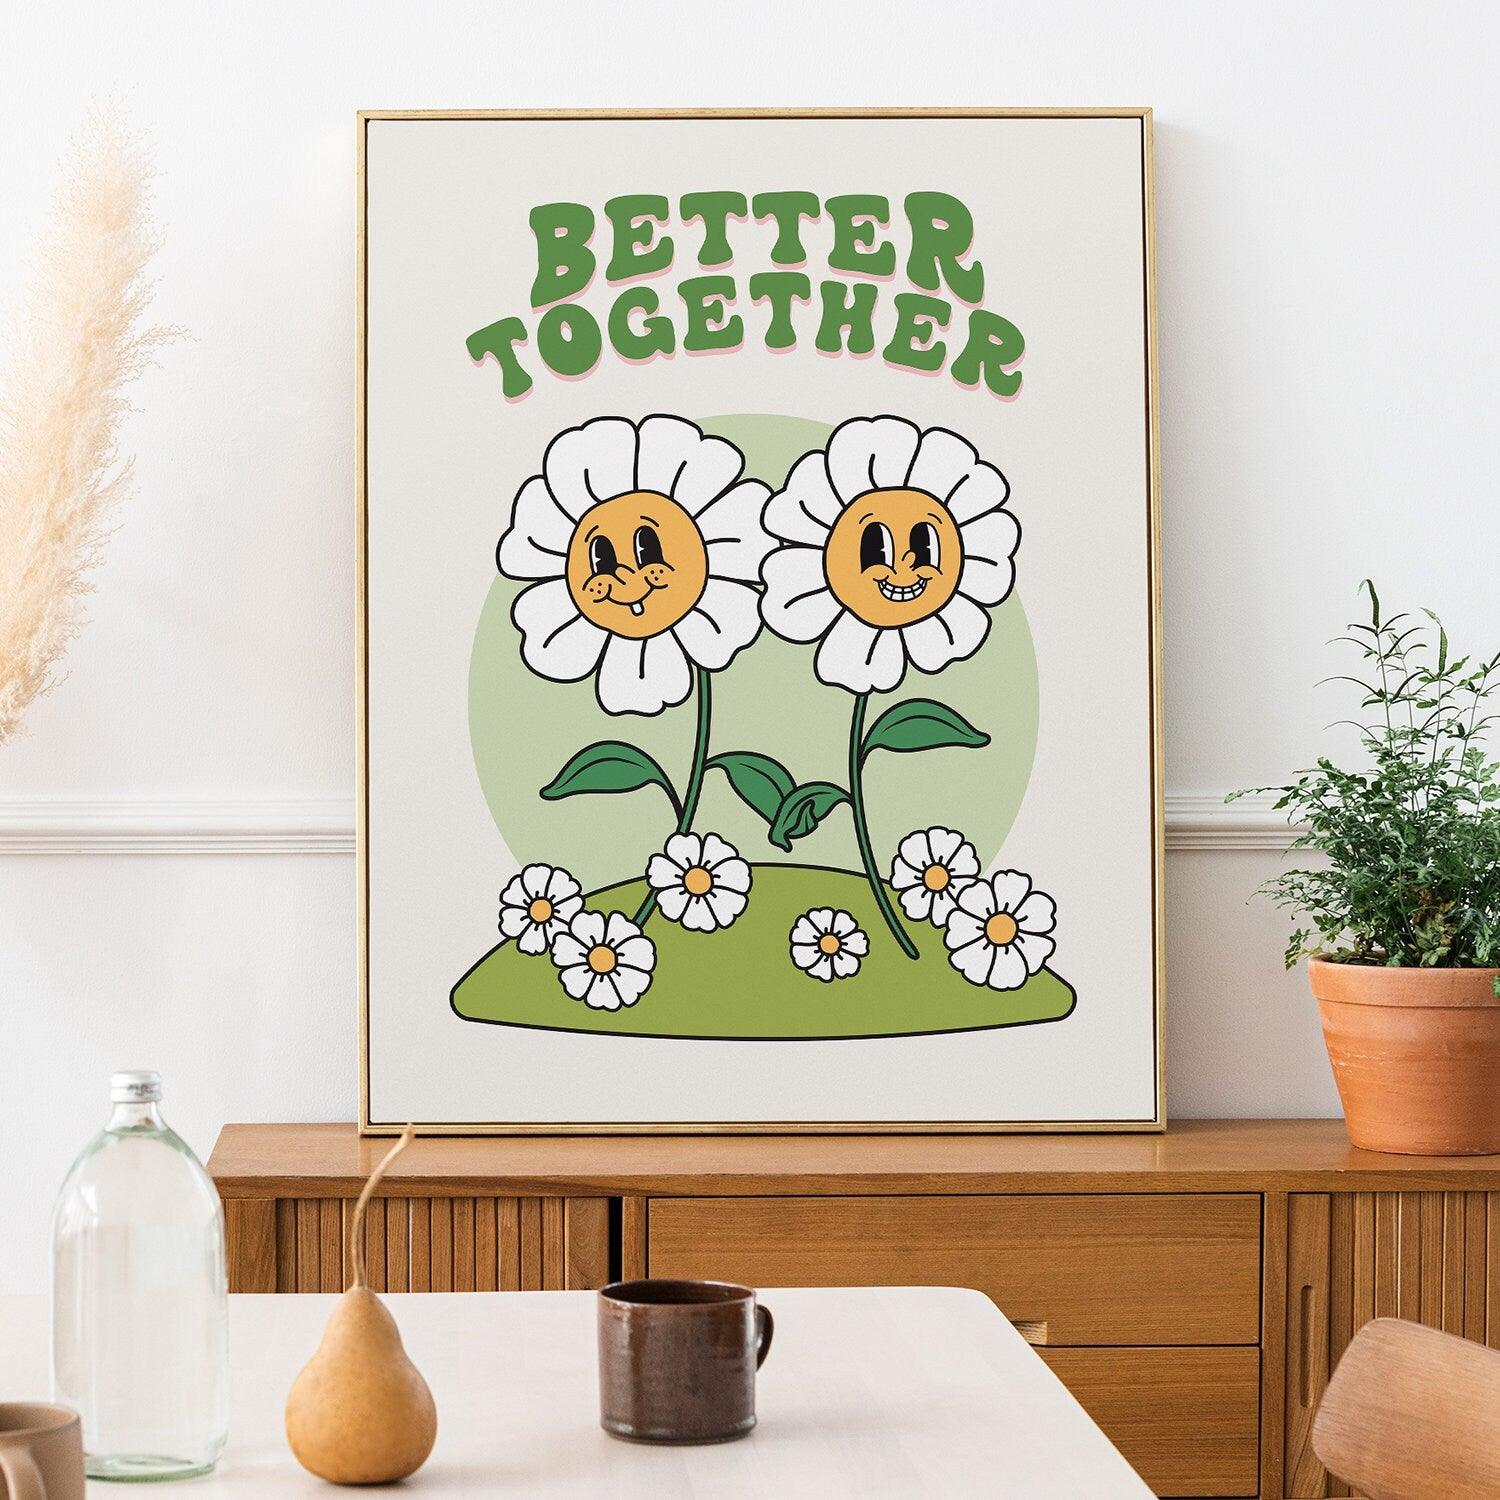 Better Together Retro Flower Poster - shopartivo